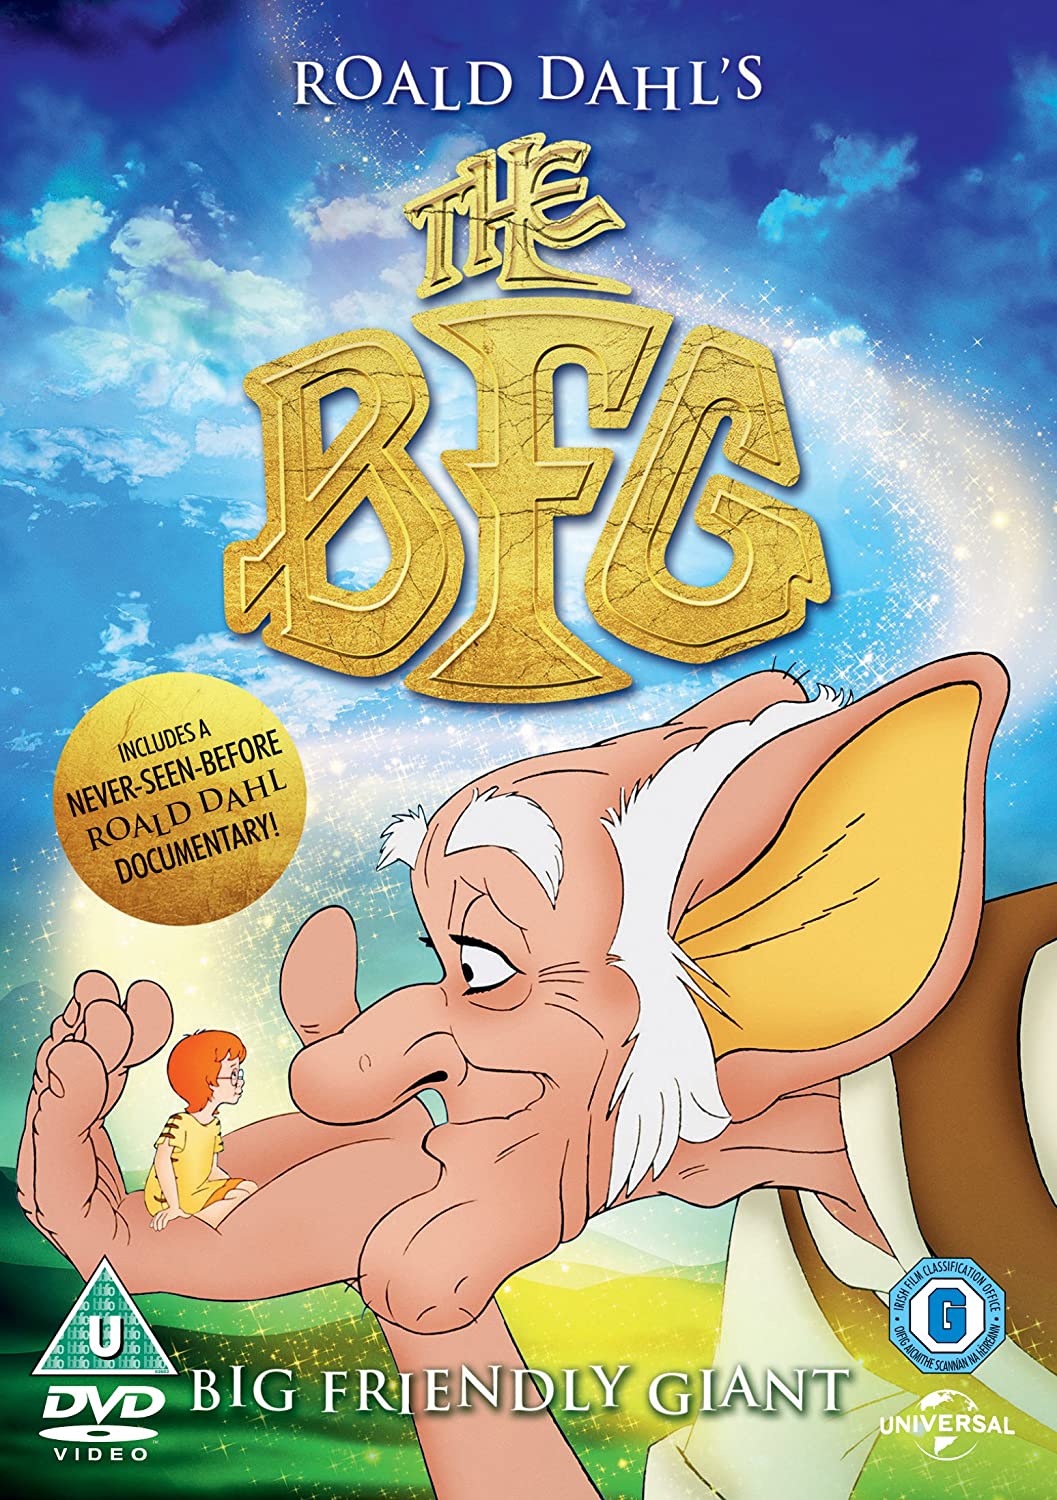 Roald Dahl's The BFG: Big Friendly Giant [2016] - Family/Fantasy [DVD]